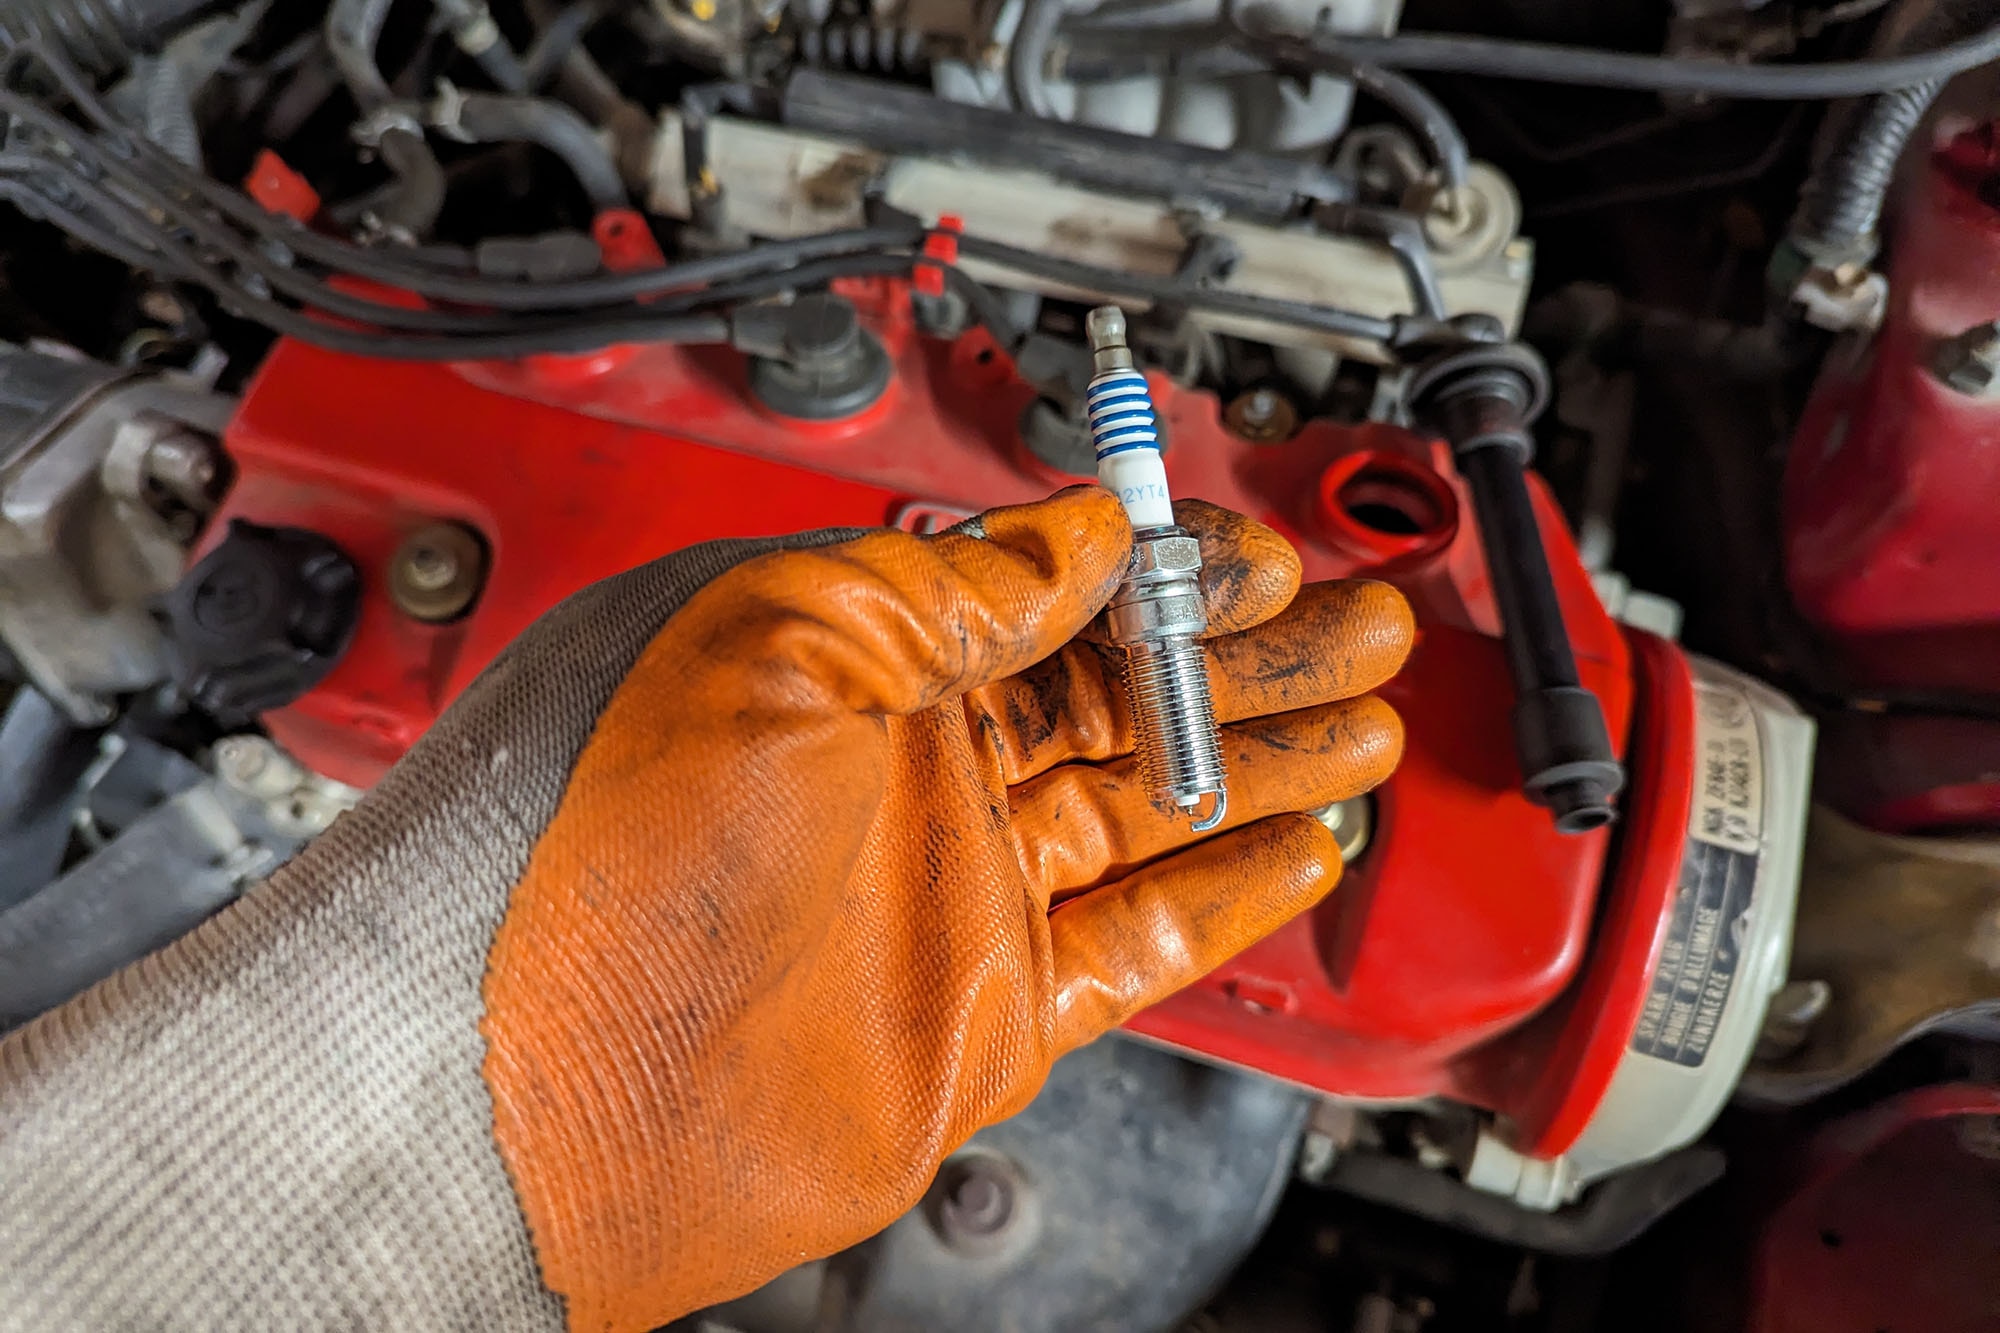 A gloved hand holds a spark plug above an engine bay